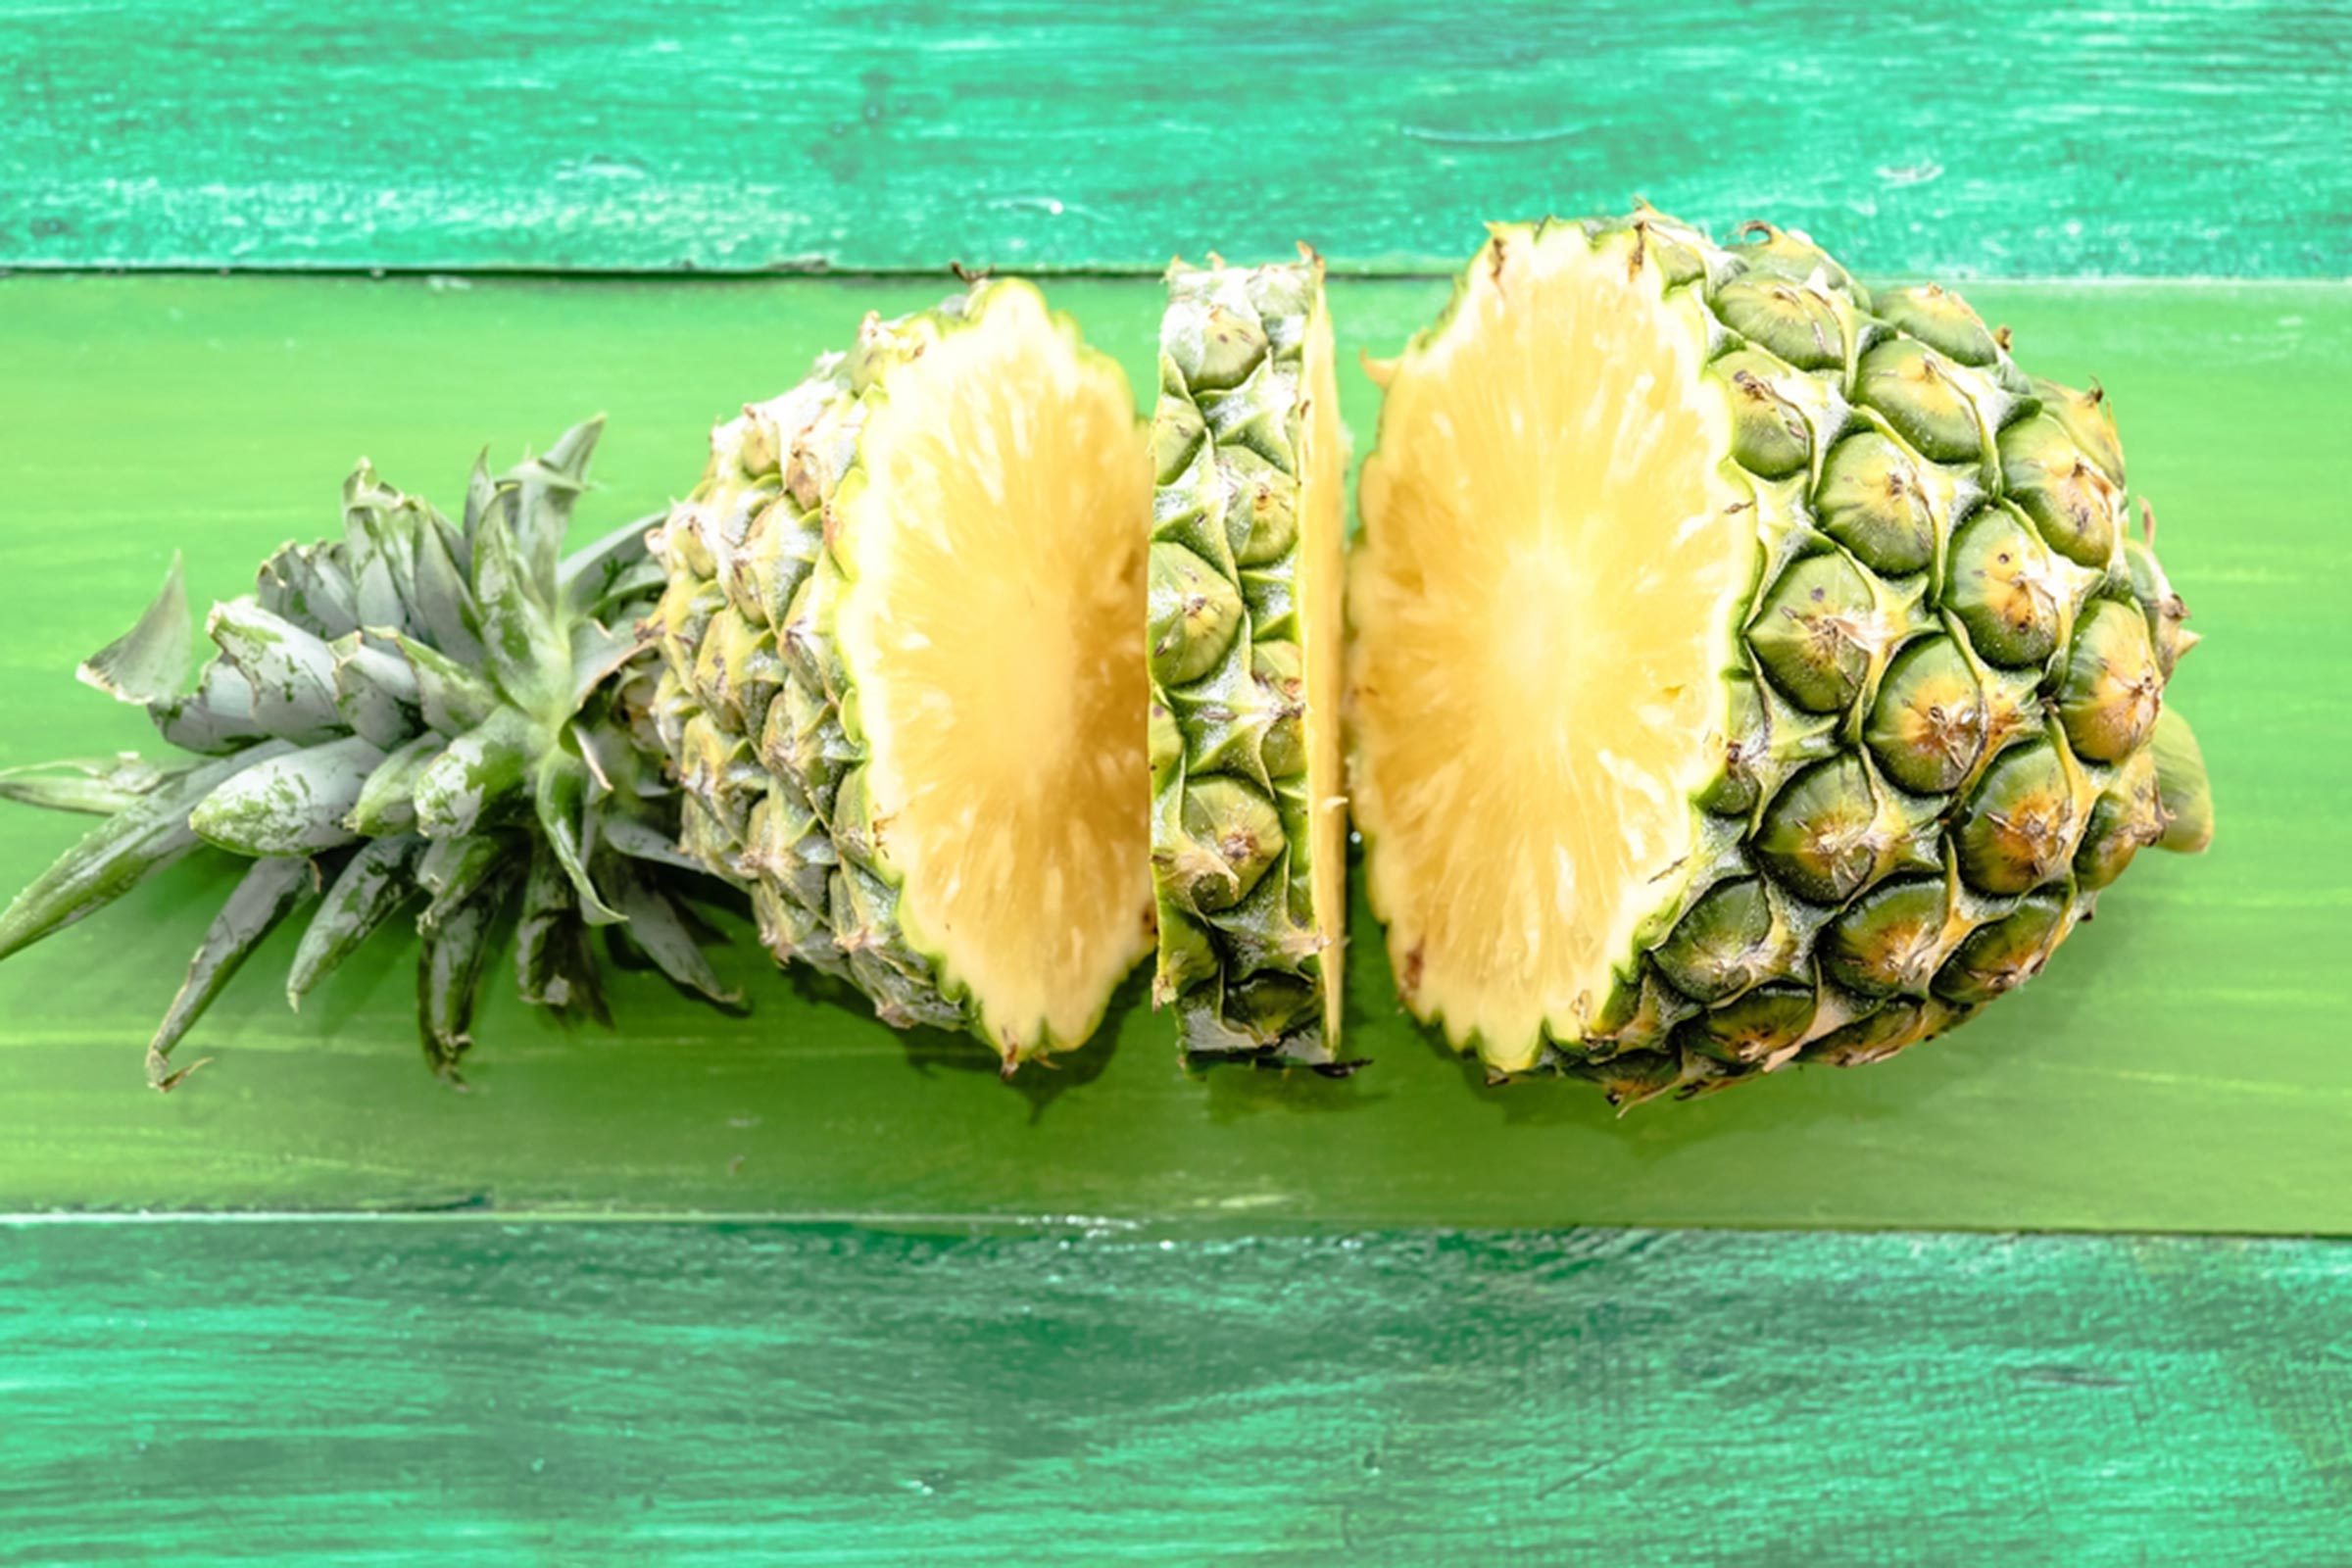 sliced pineapple